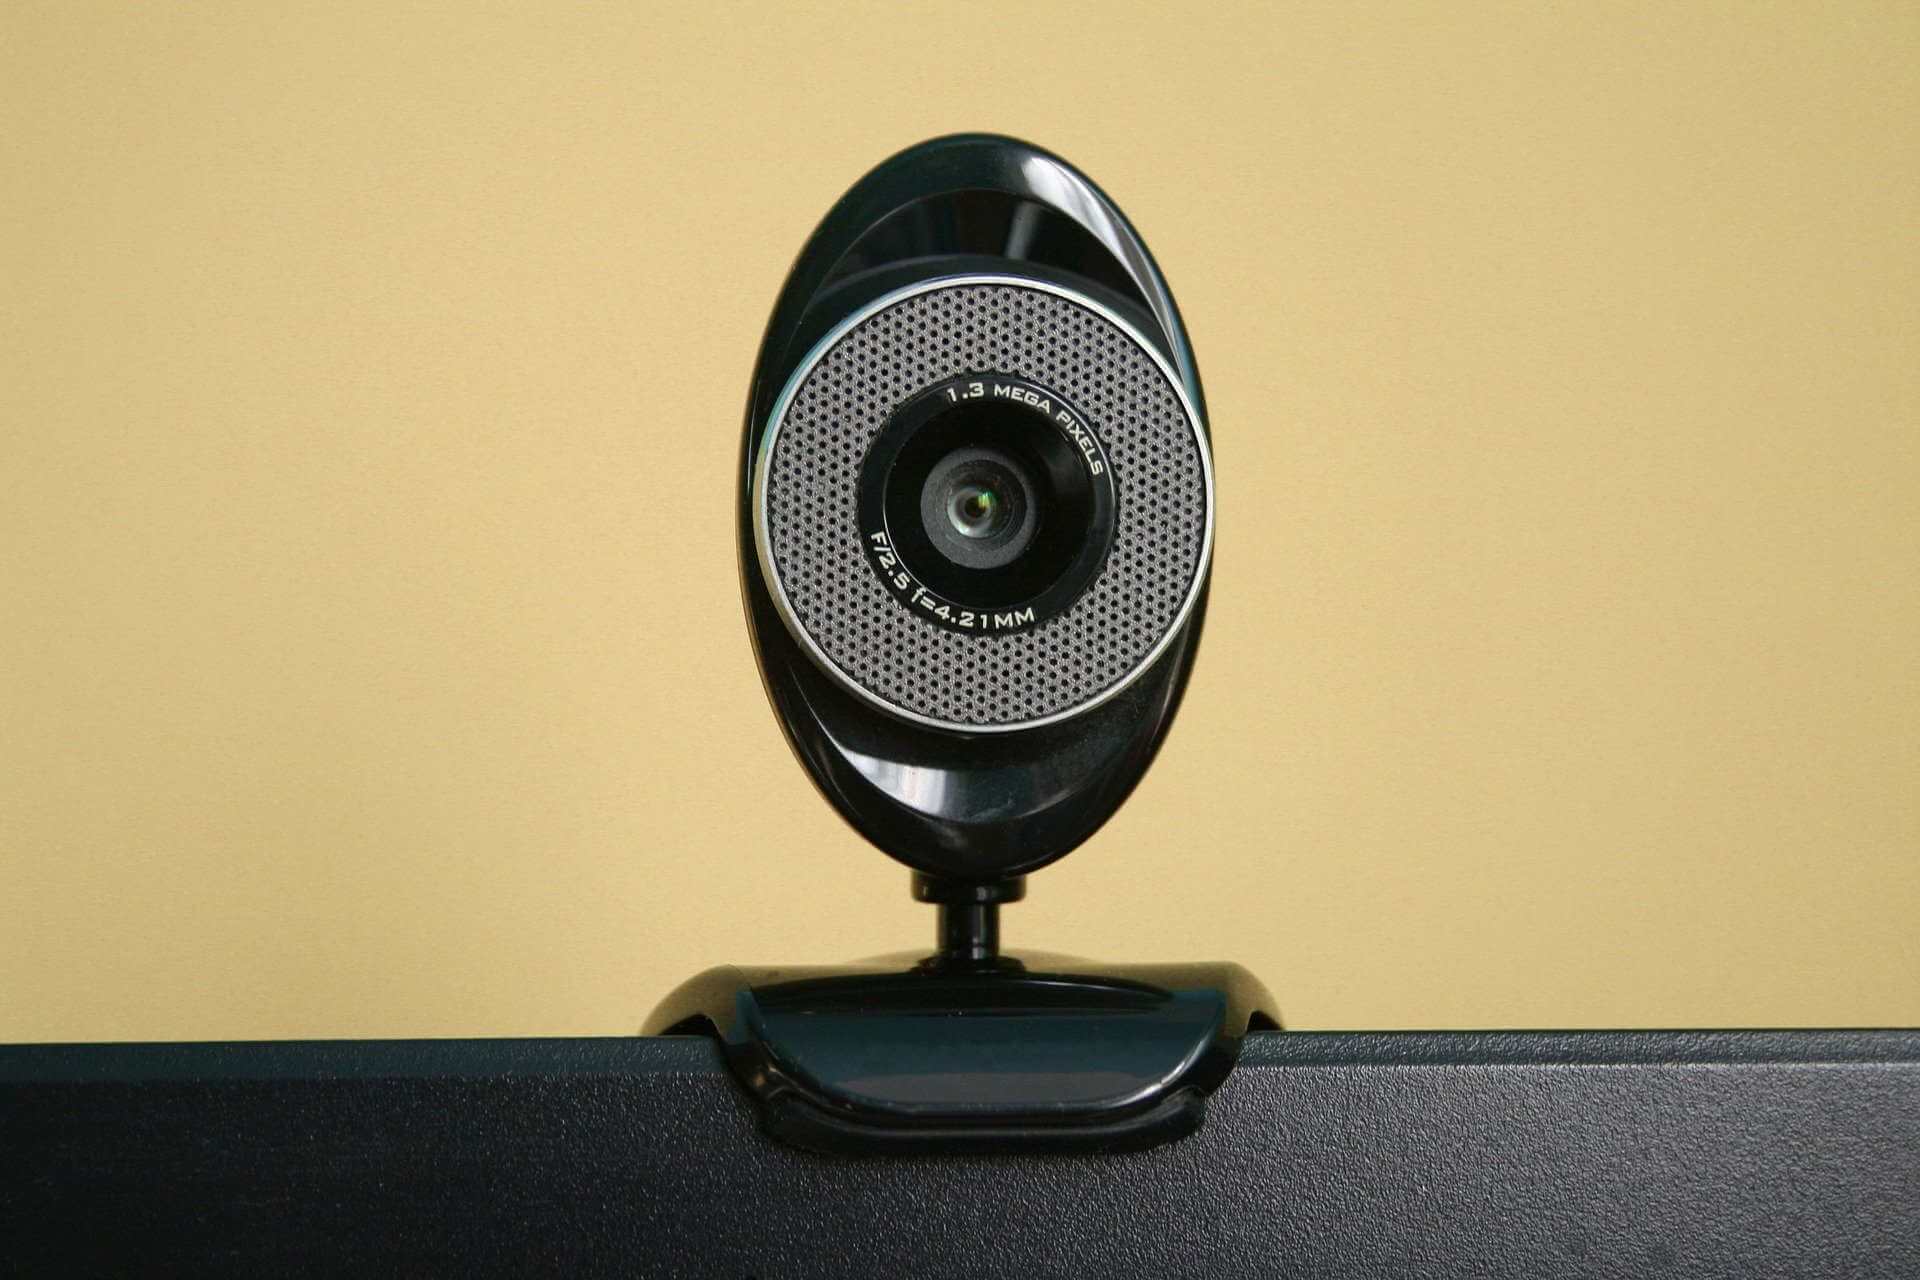 Webcam Test 5 best online tools